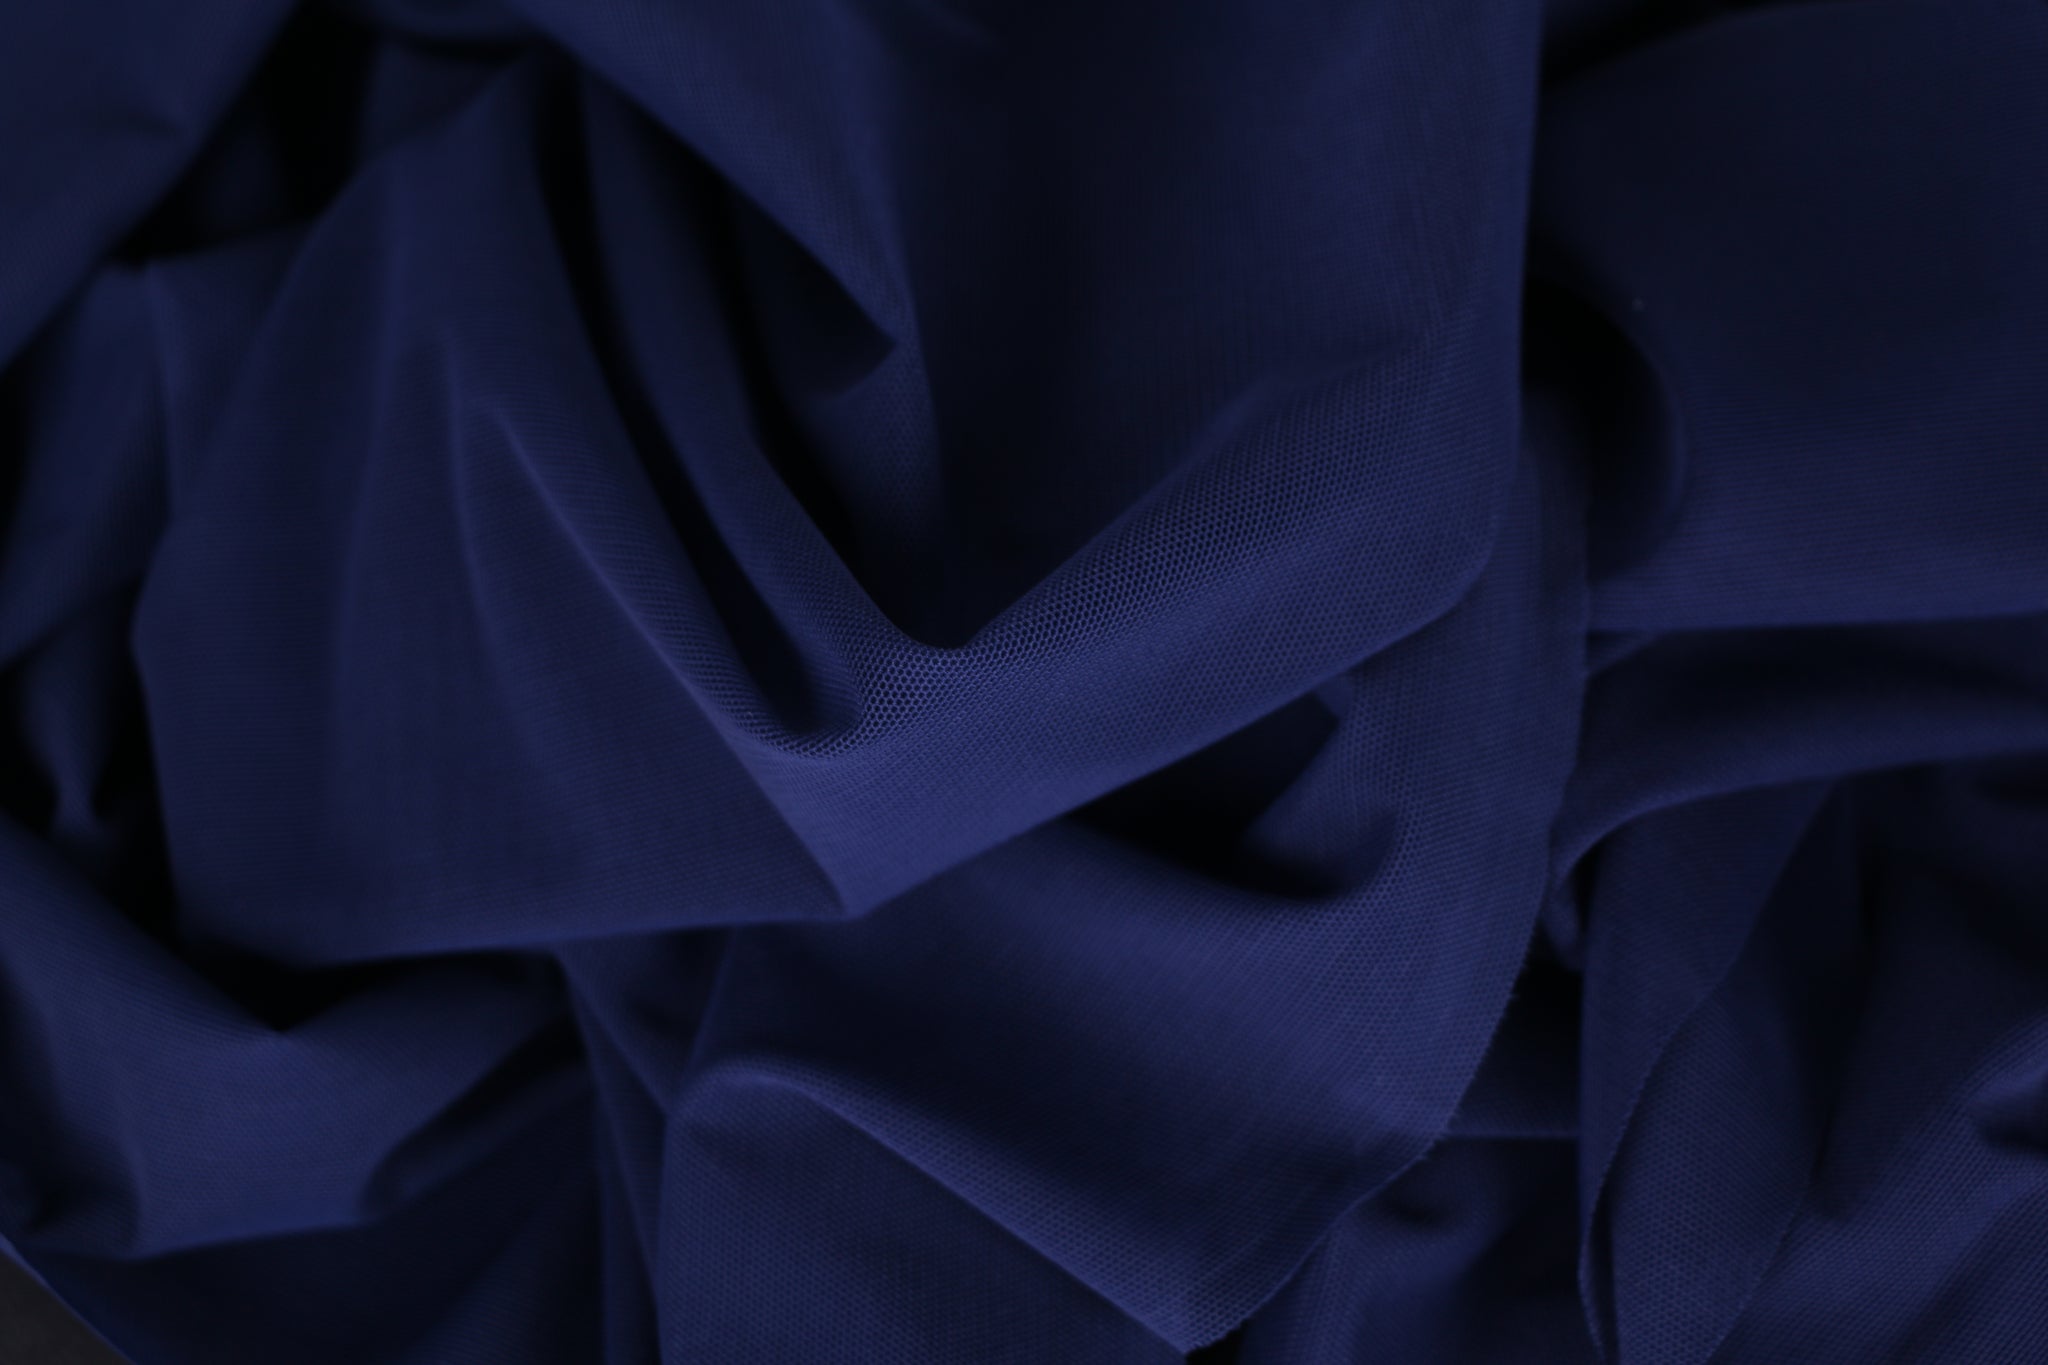 navy stretch mesh fabric for bra making